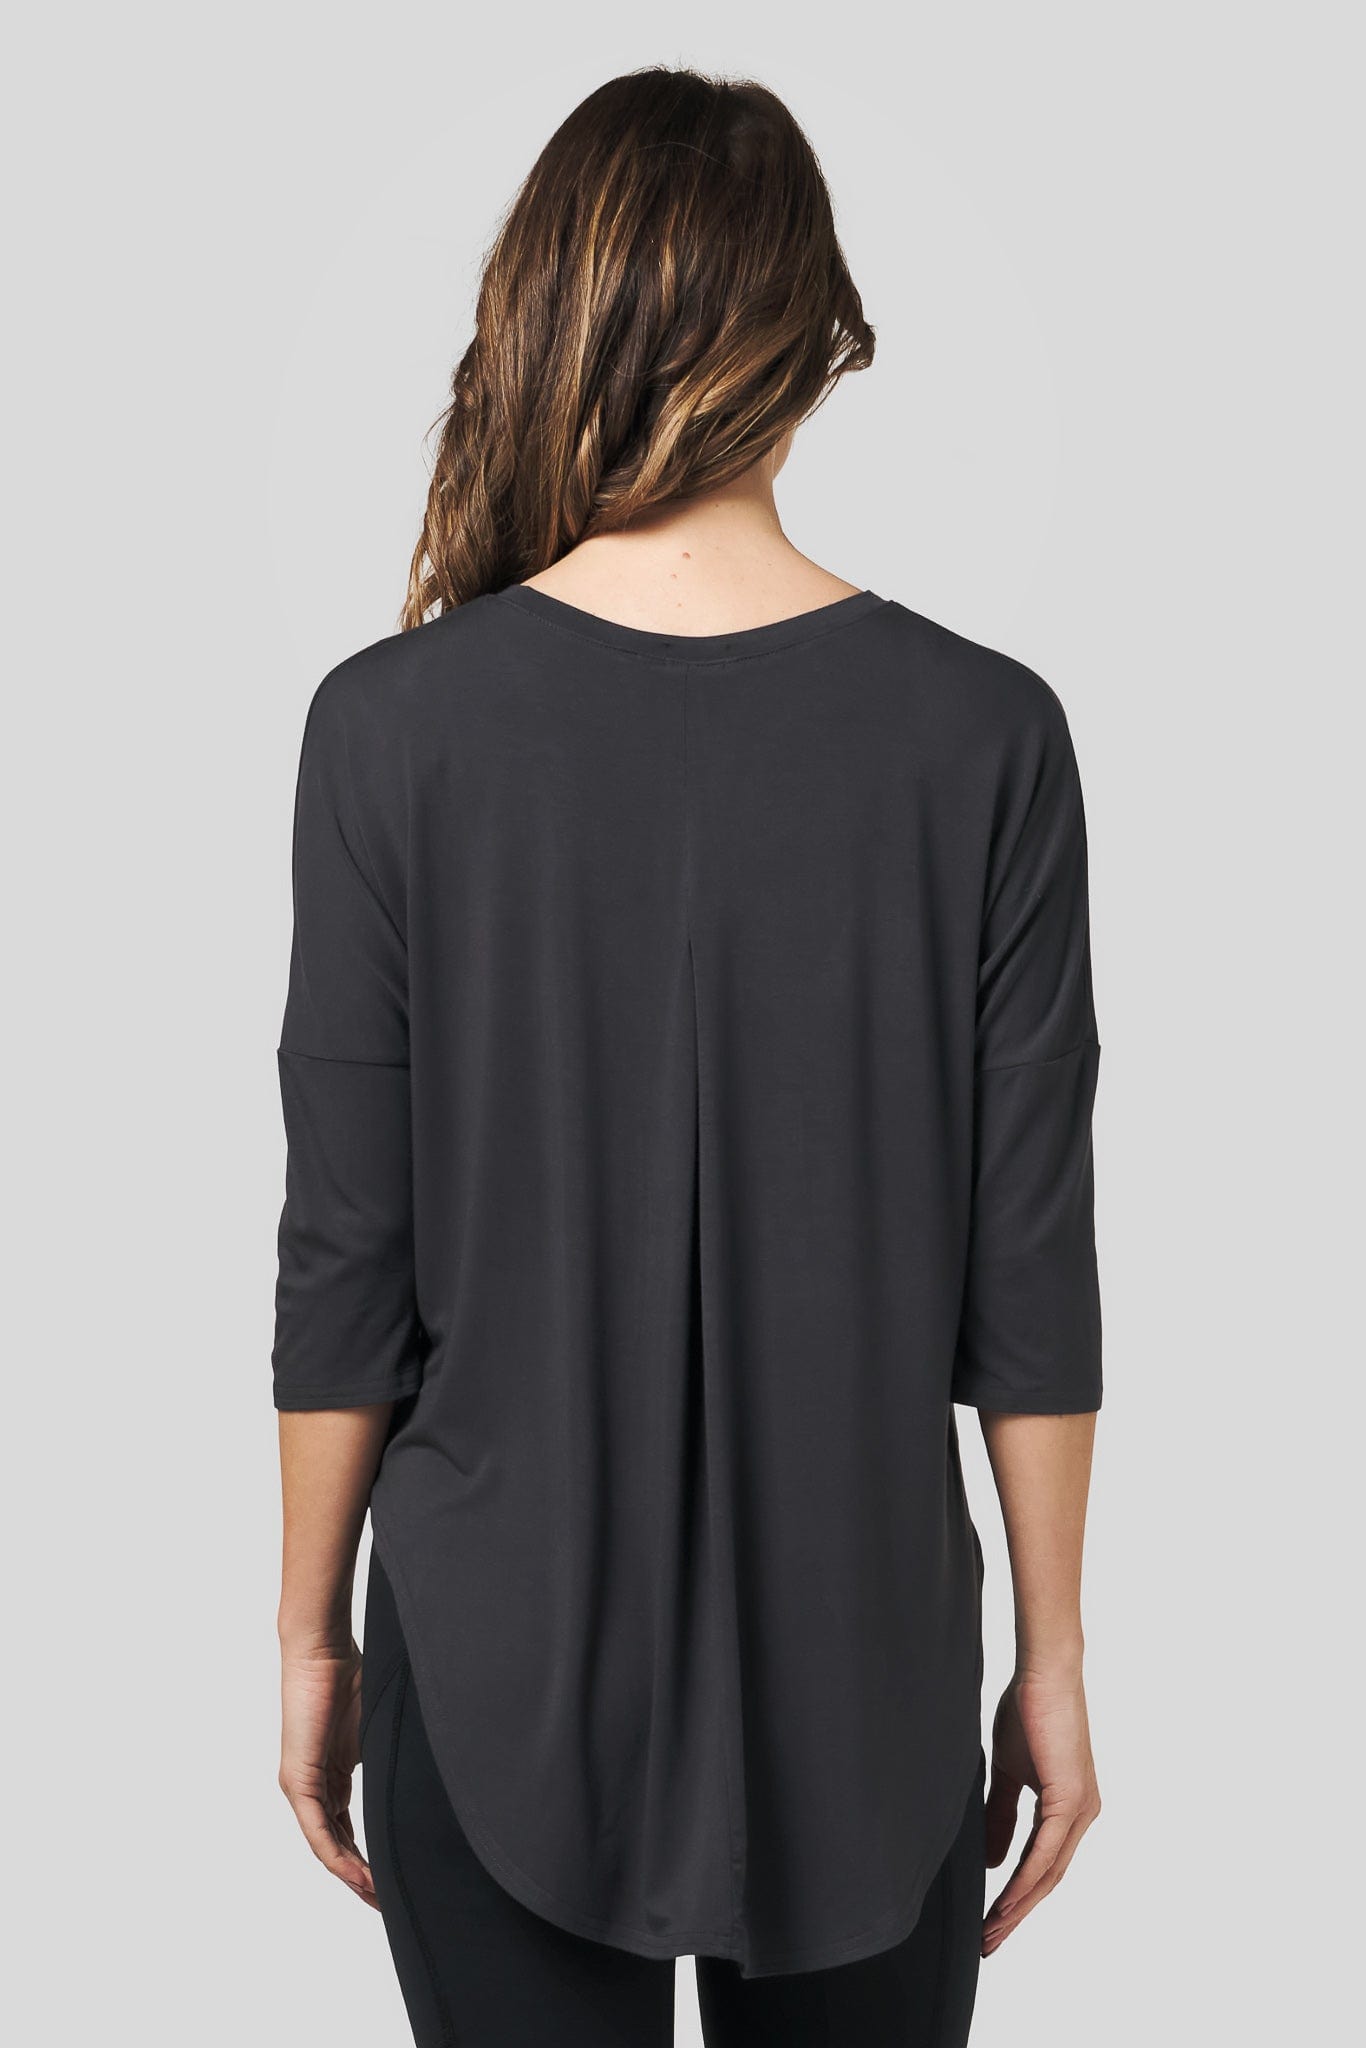 Back of a woman wearing a dark grey 3/4 length sleeve shirt